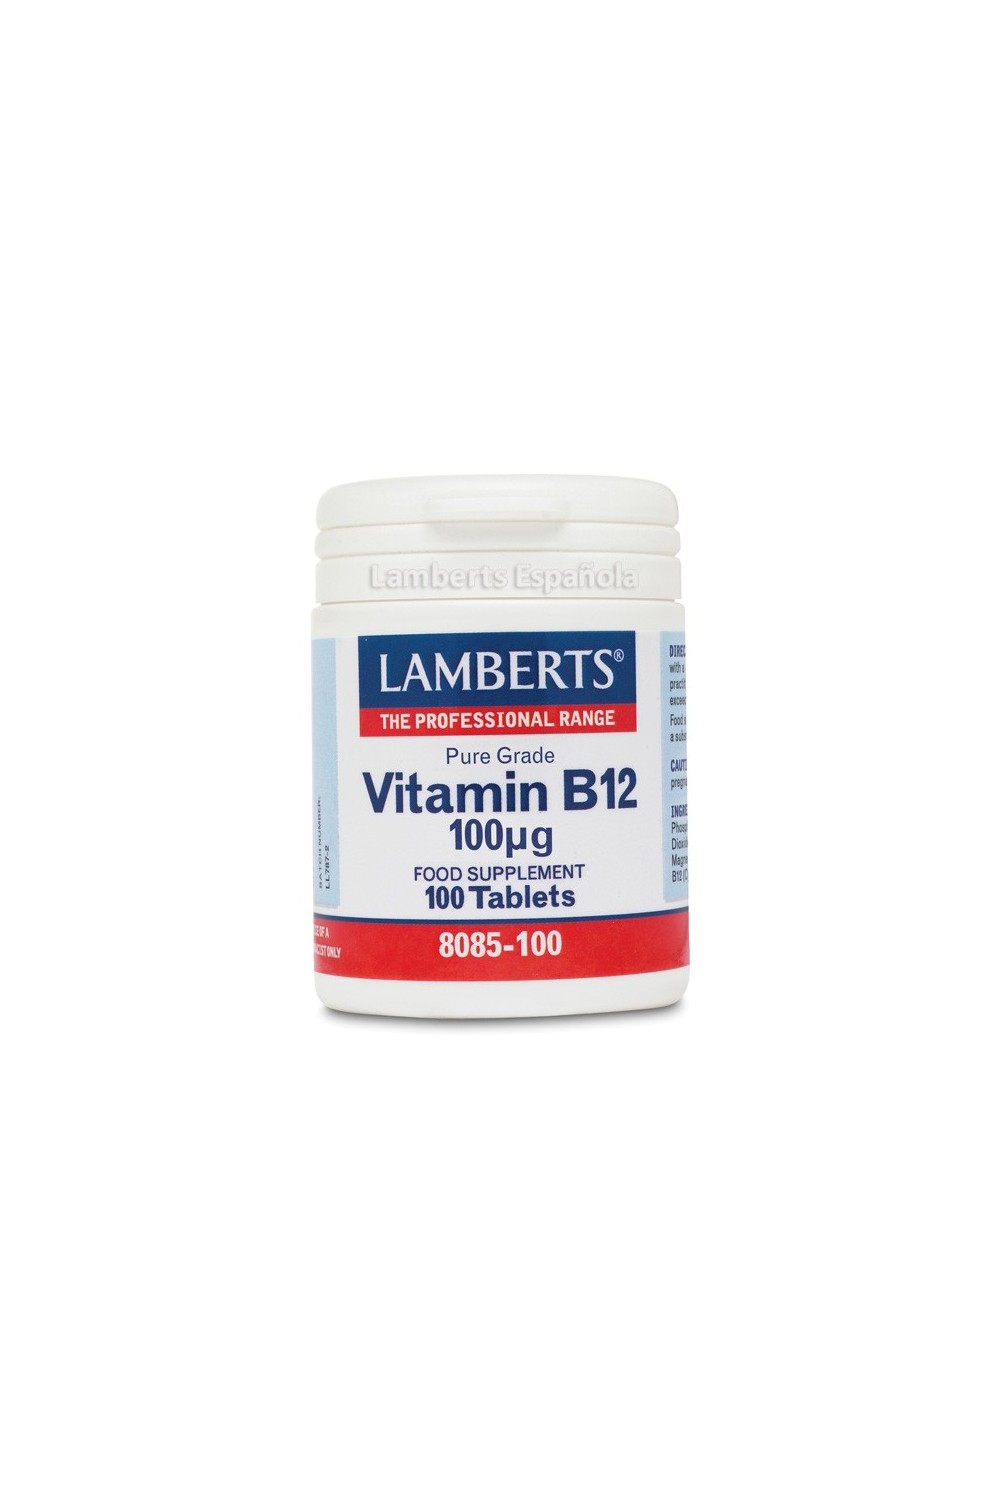 Lamberts Vitamina B12 100-Ug 100 Tabs